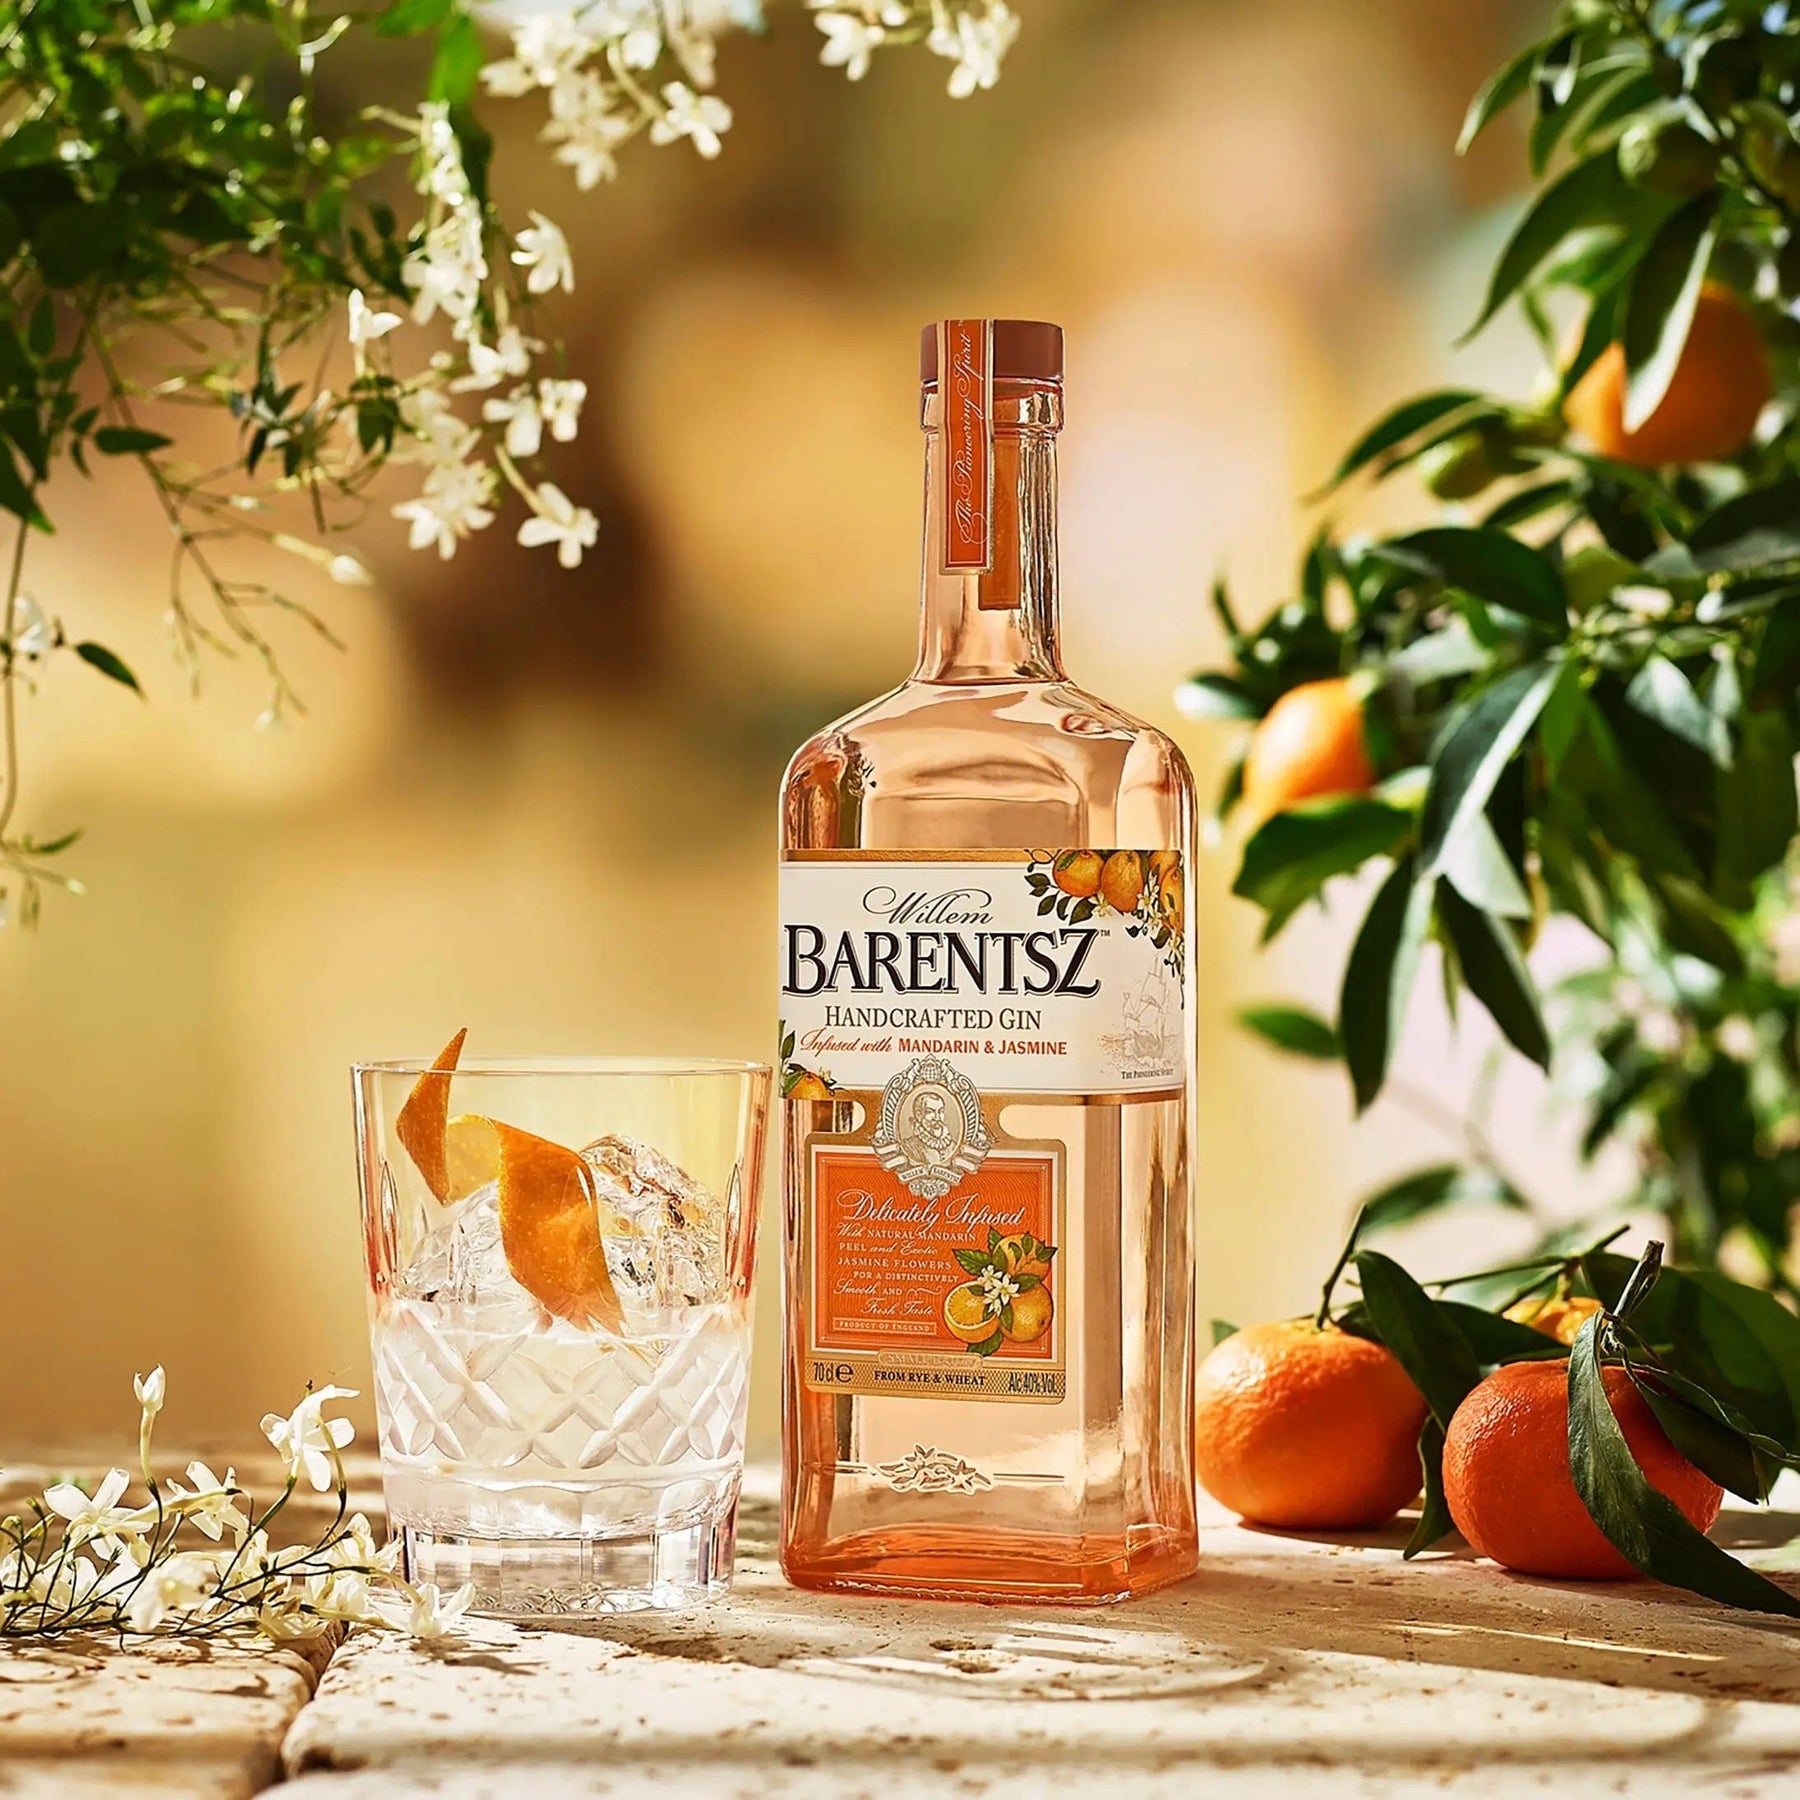 Barentsz Mandarin Gin and Tonic